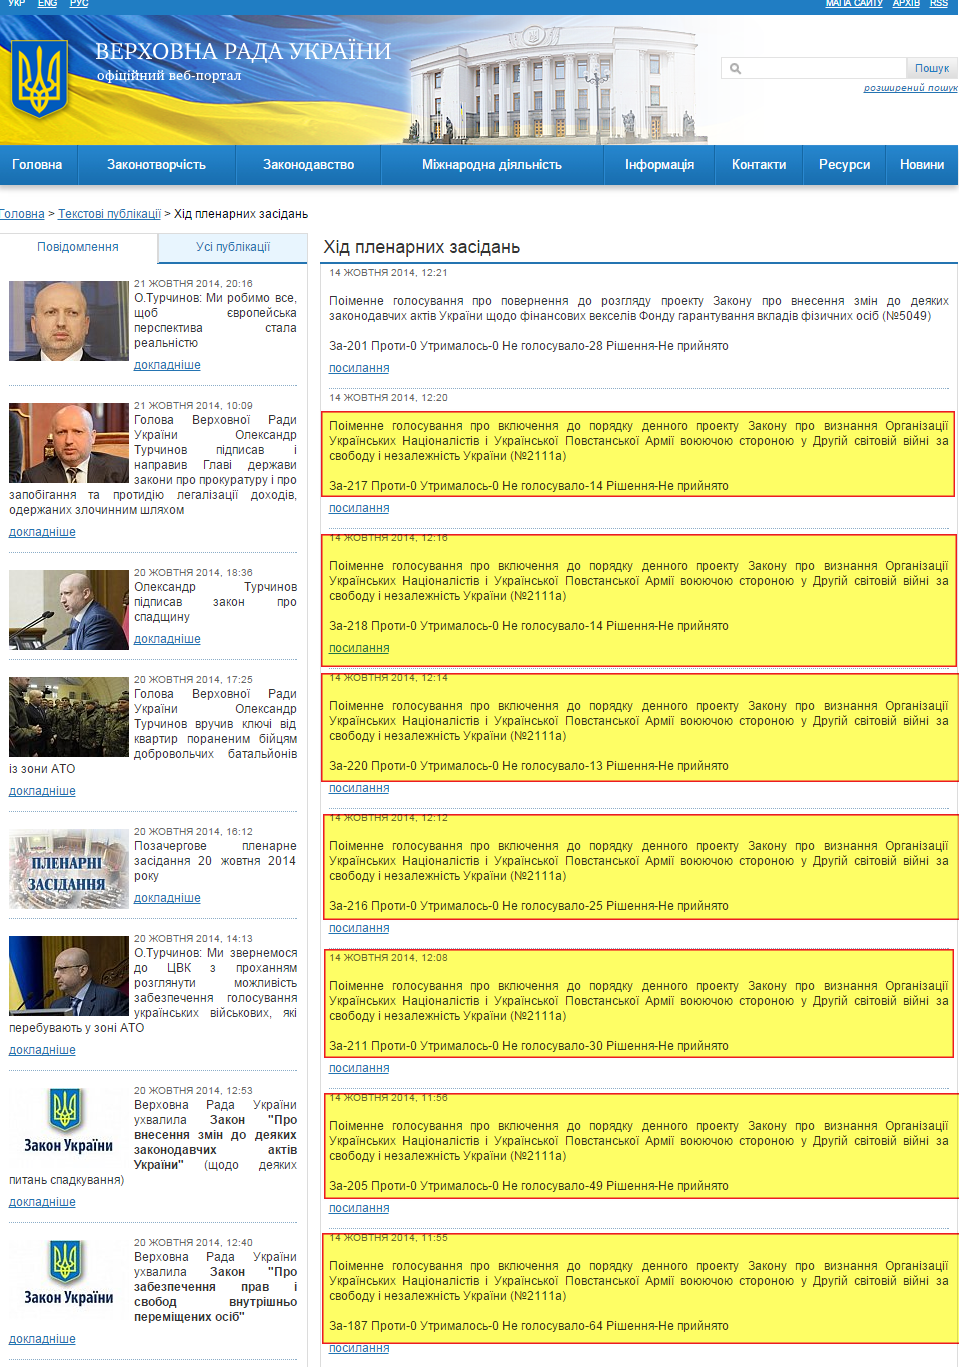 http://iportal.rada.gov.ua/news/hpz/page/4